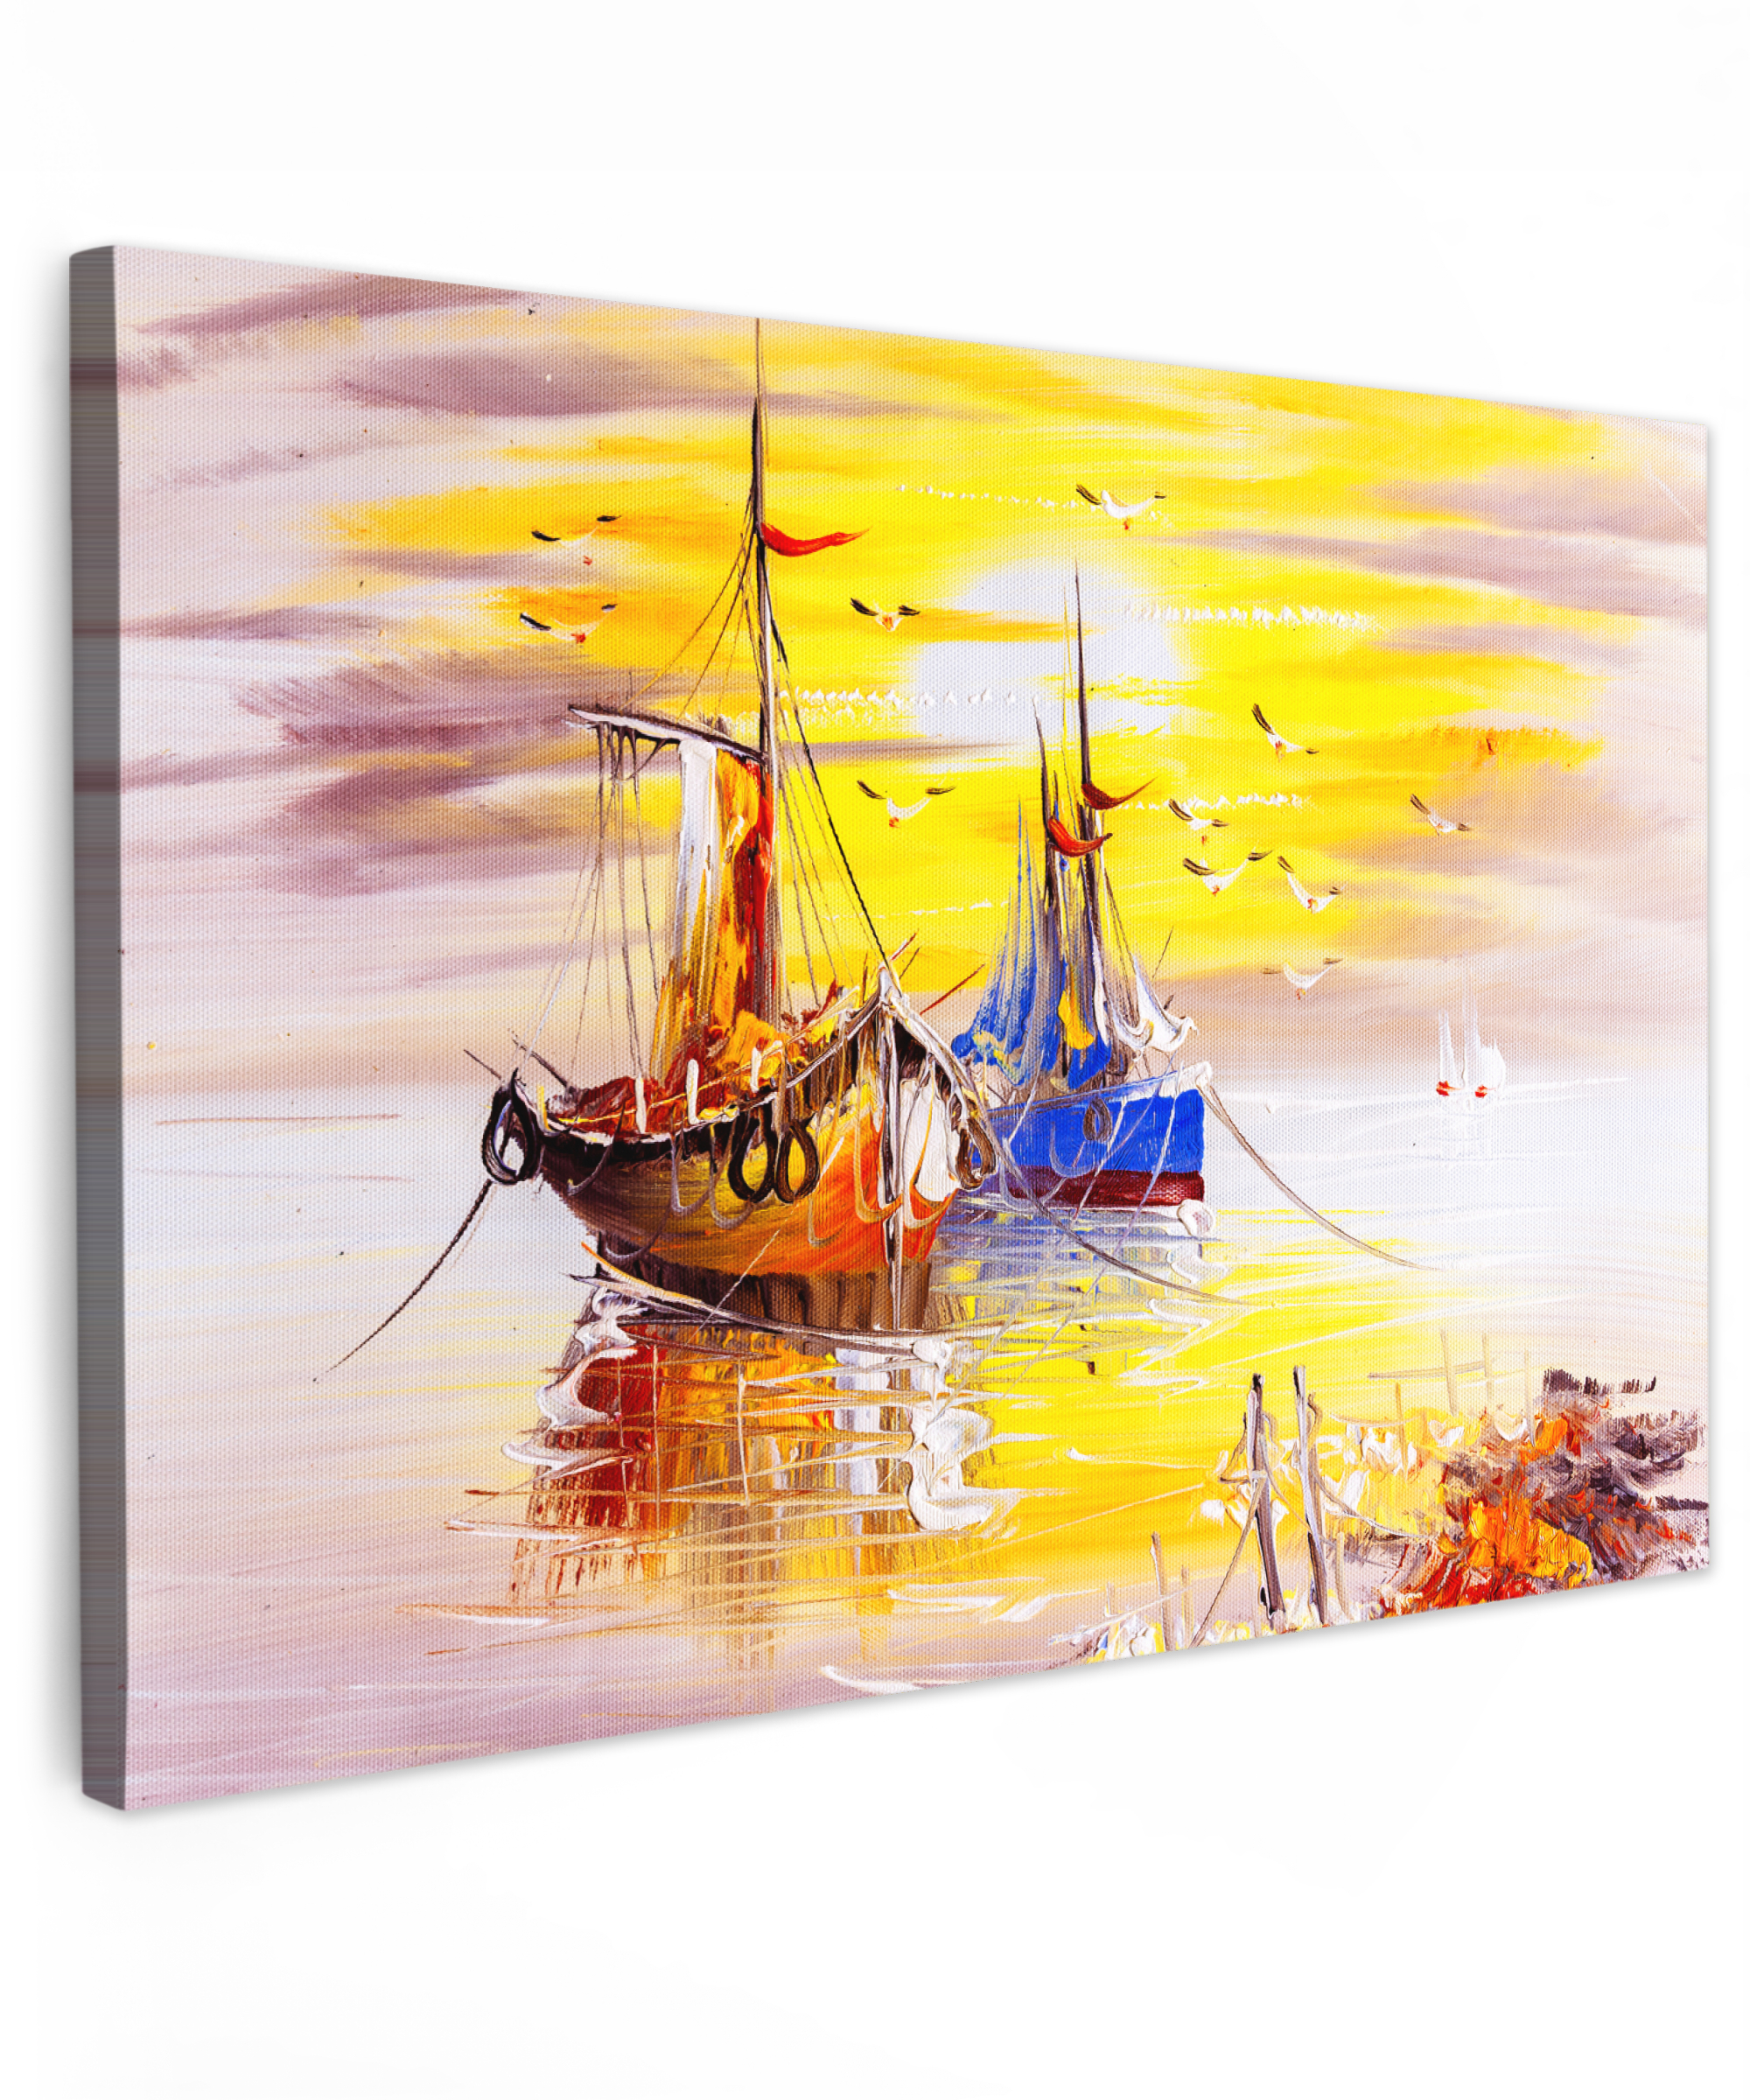 Leinwandbild - Gemälde - Boot - Wasser - Ölfarbe